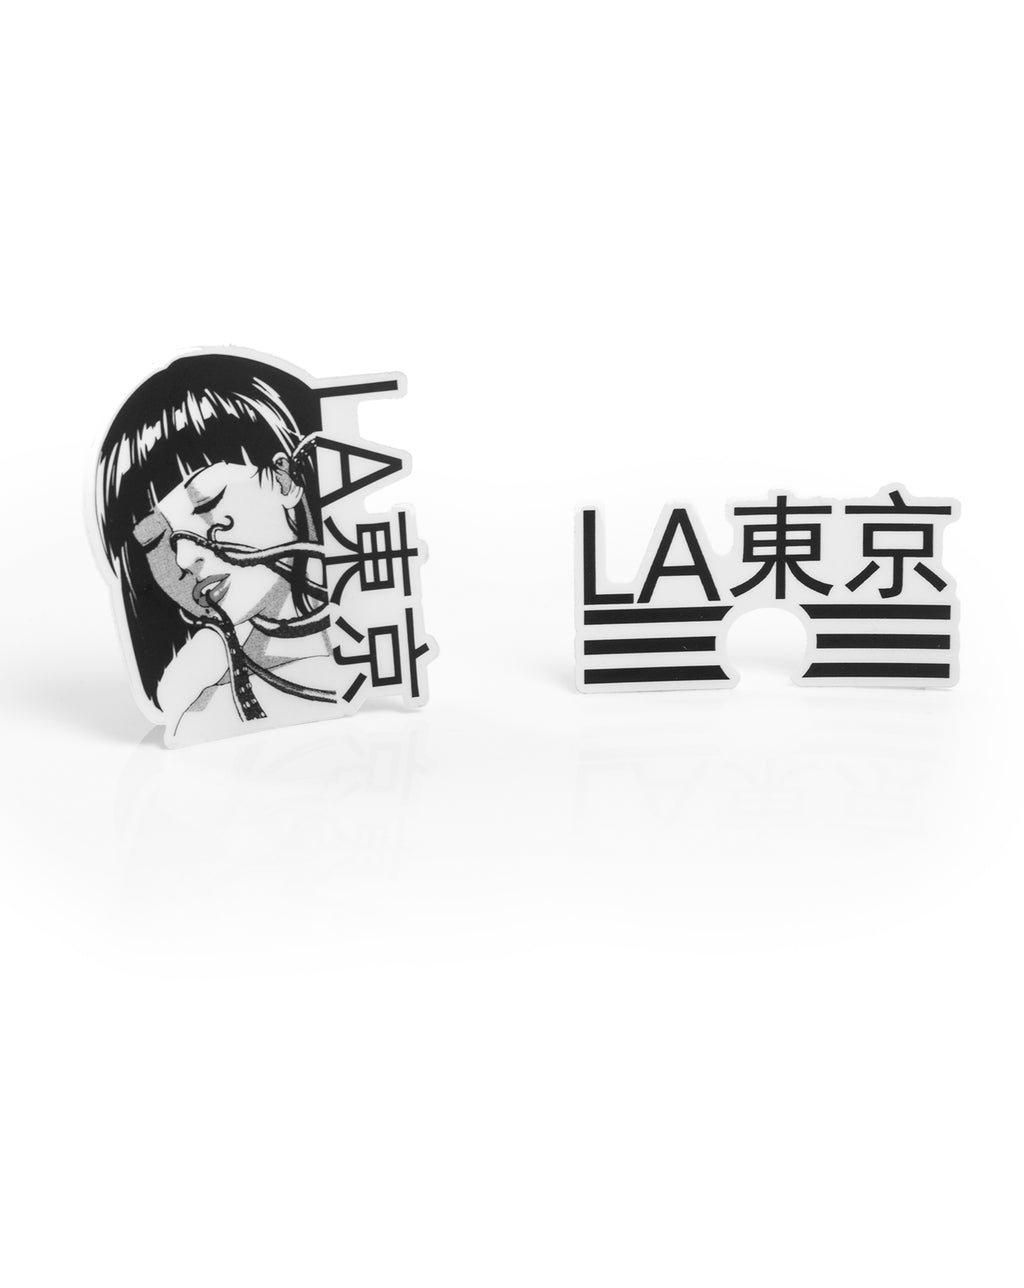 Latokyo Sticker Pack